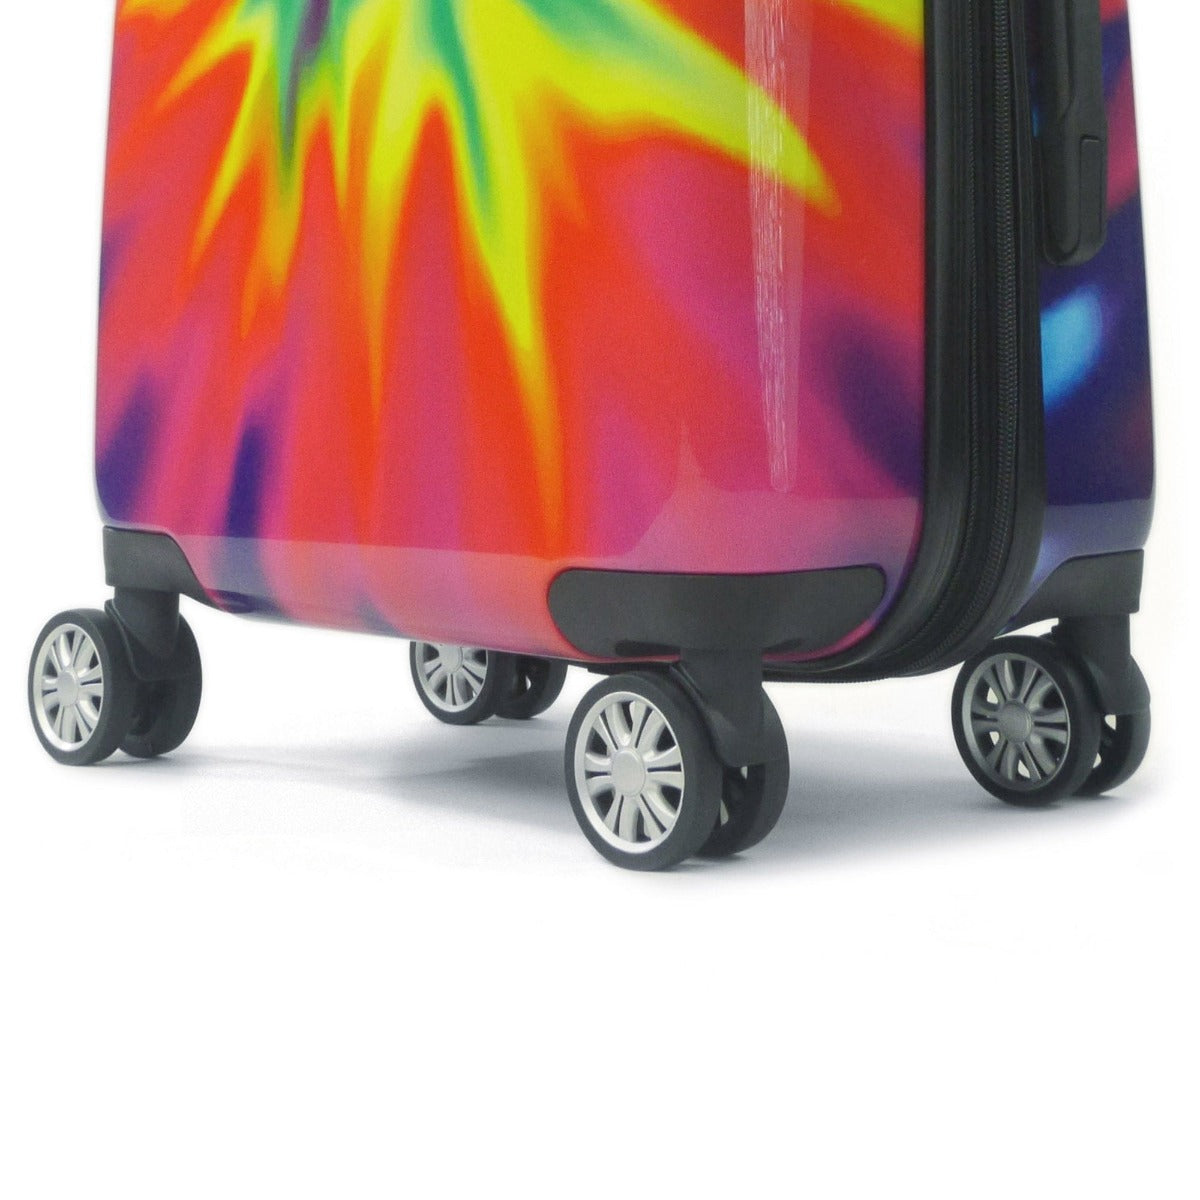 22 inch tie dye Rainbow Swirl Hard Sided Spinner Suitcase Rolling Luggage